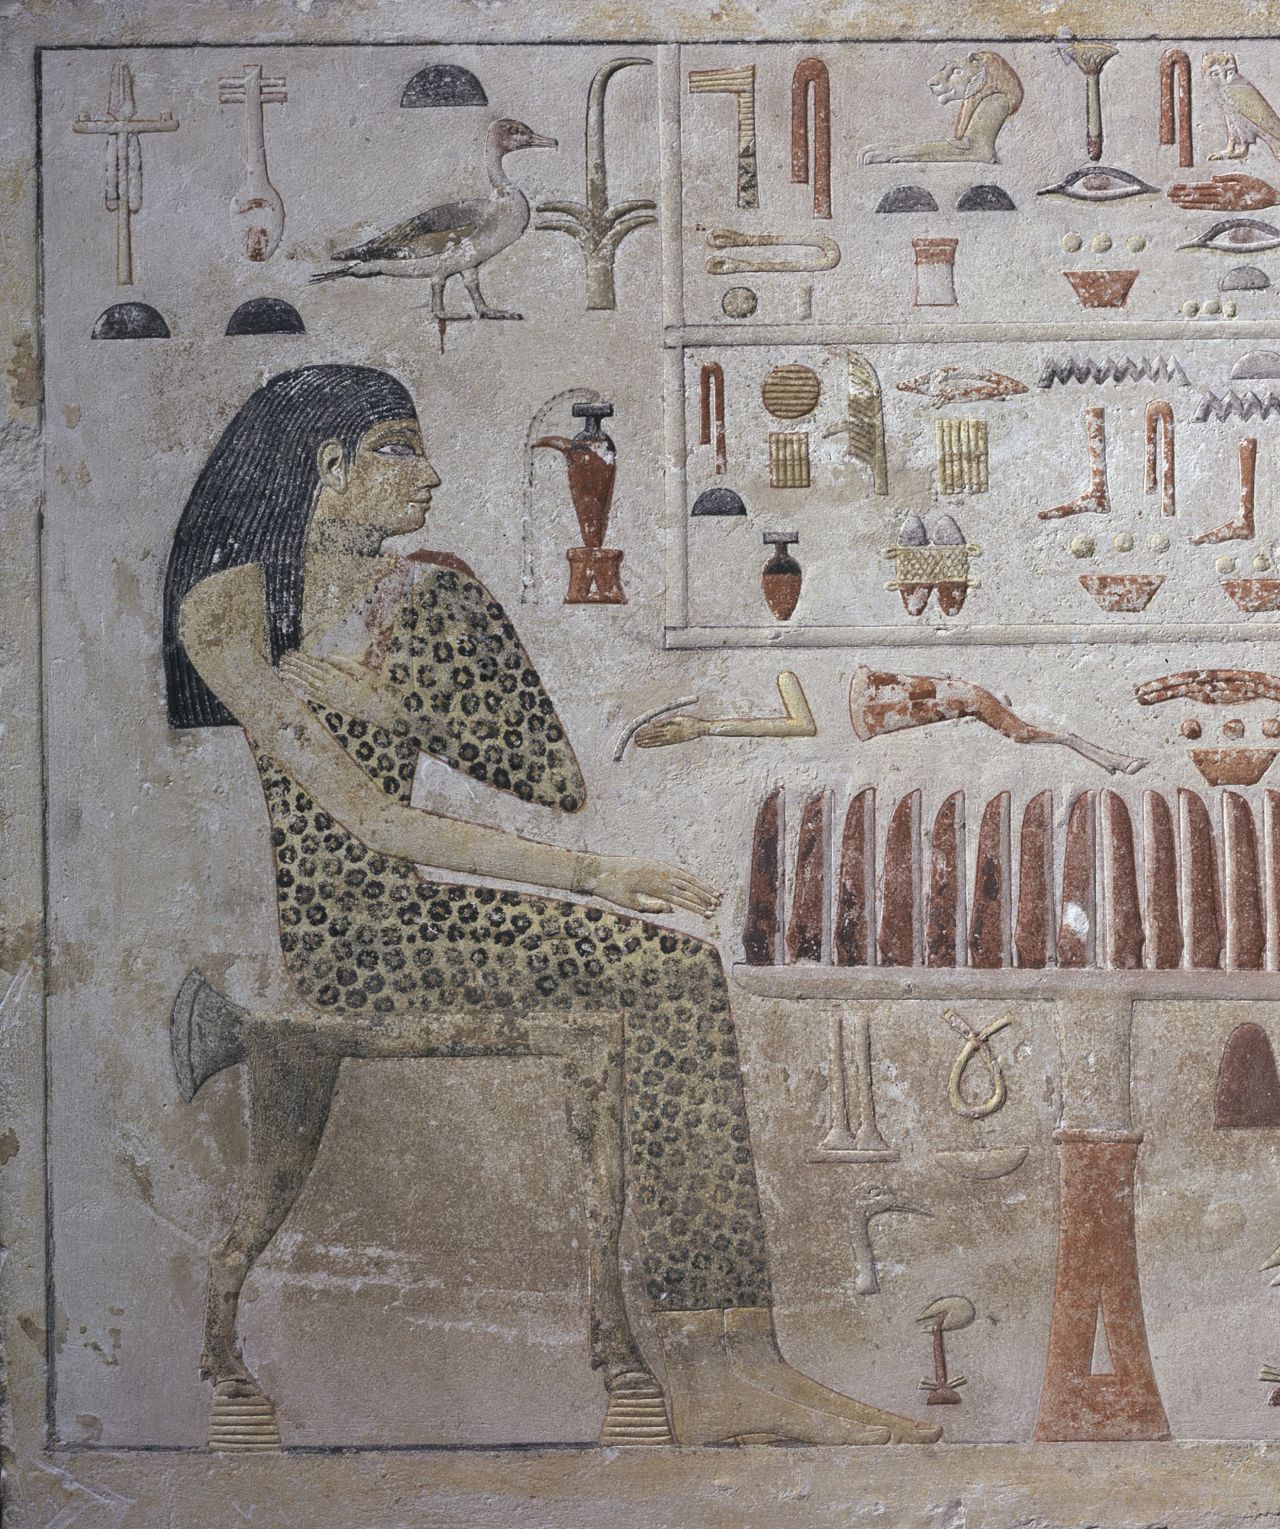 An Egyptian stele shows Nefertiabet, an ancient Egyptian princess wearing a leopard gown.